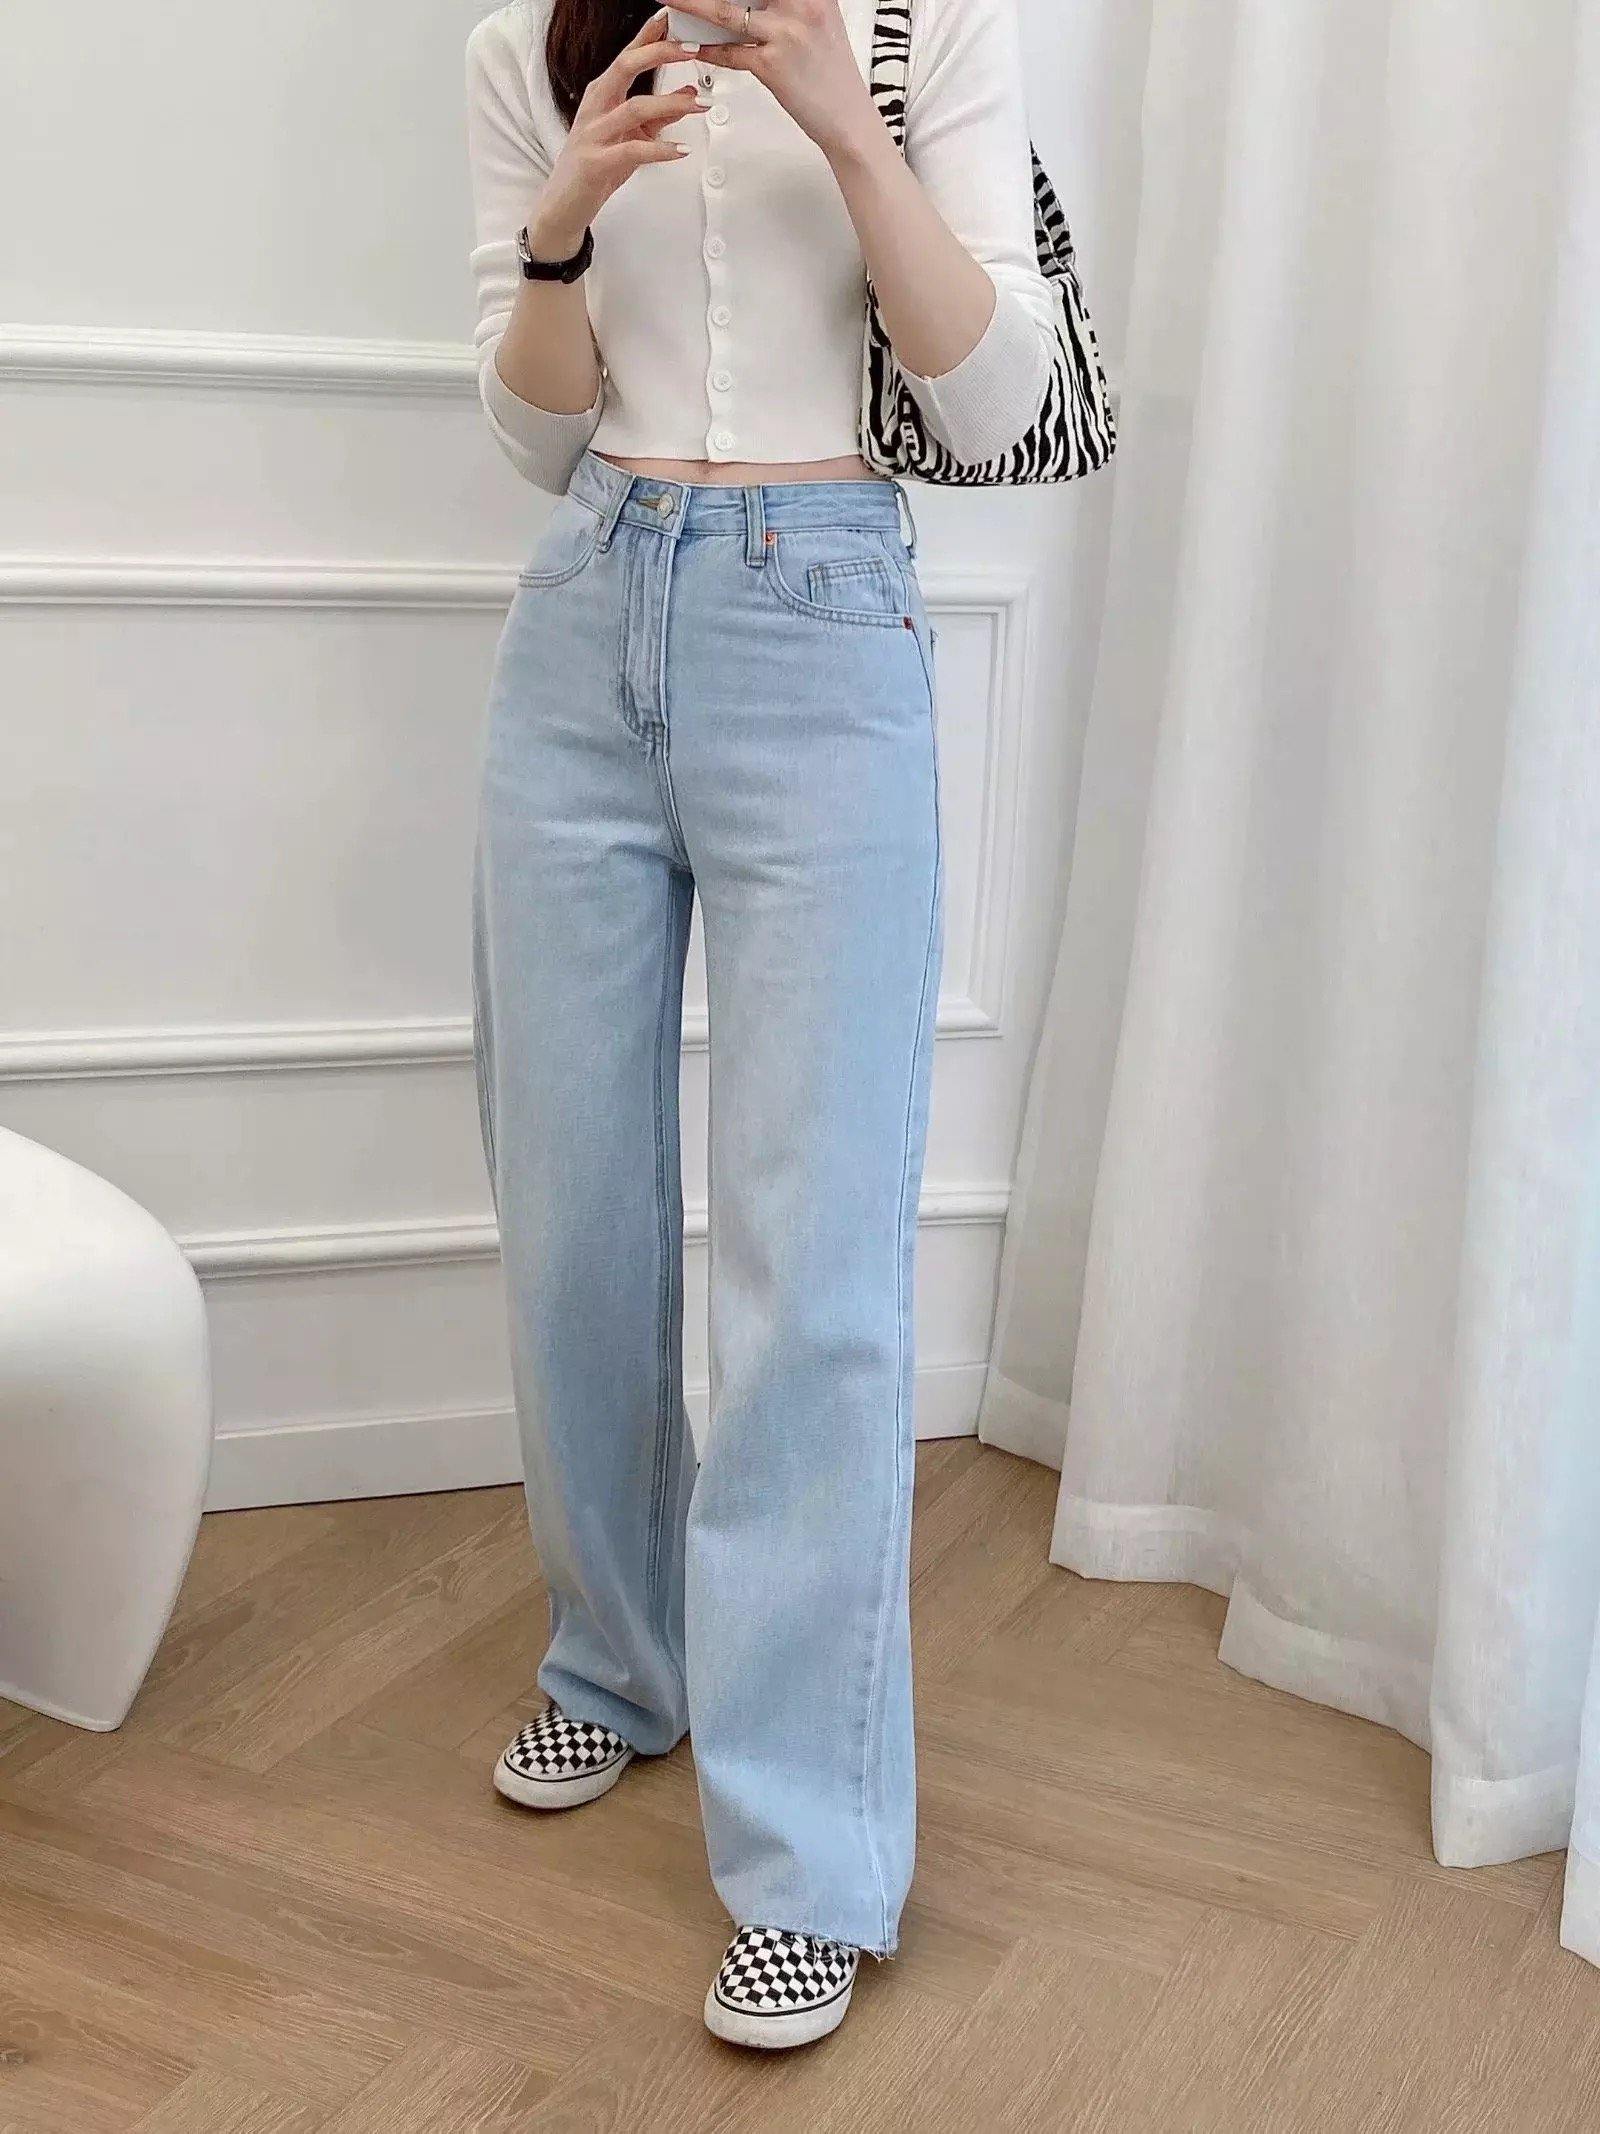 June Streetstyle Jeans - Label Frenesi Fashion